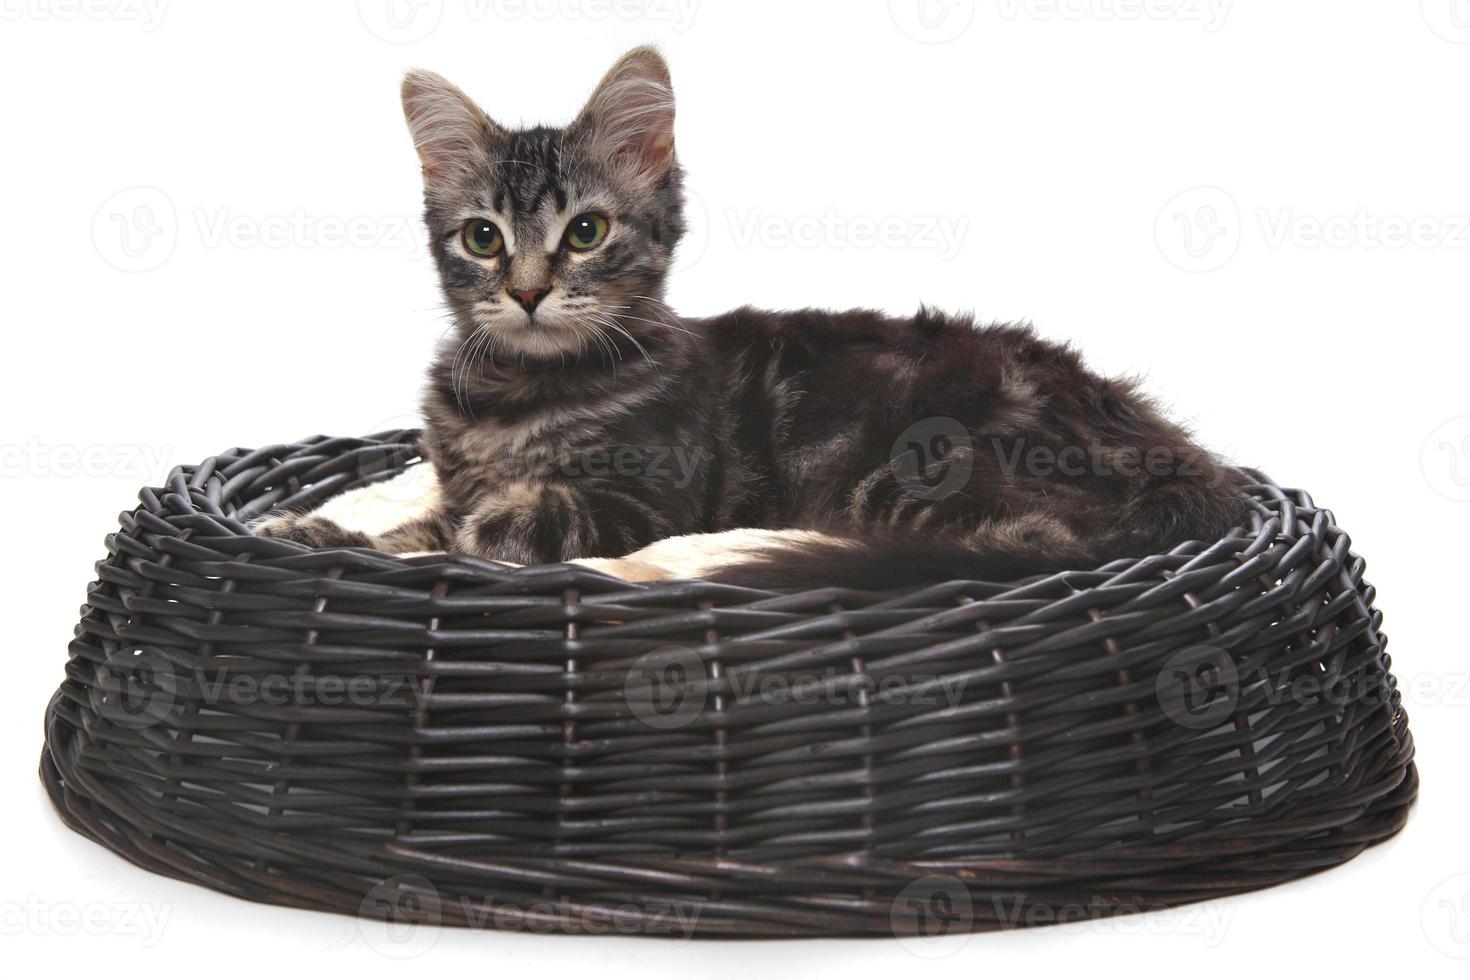 liten kattunge i en kattbädd foto